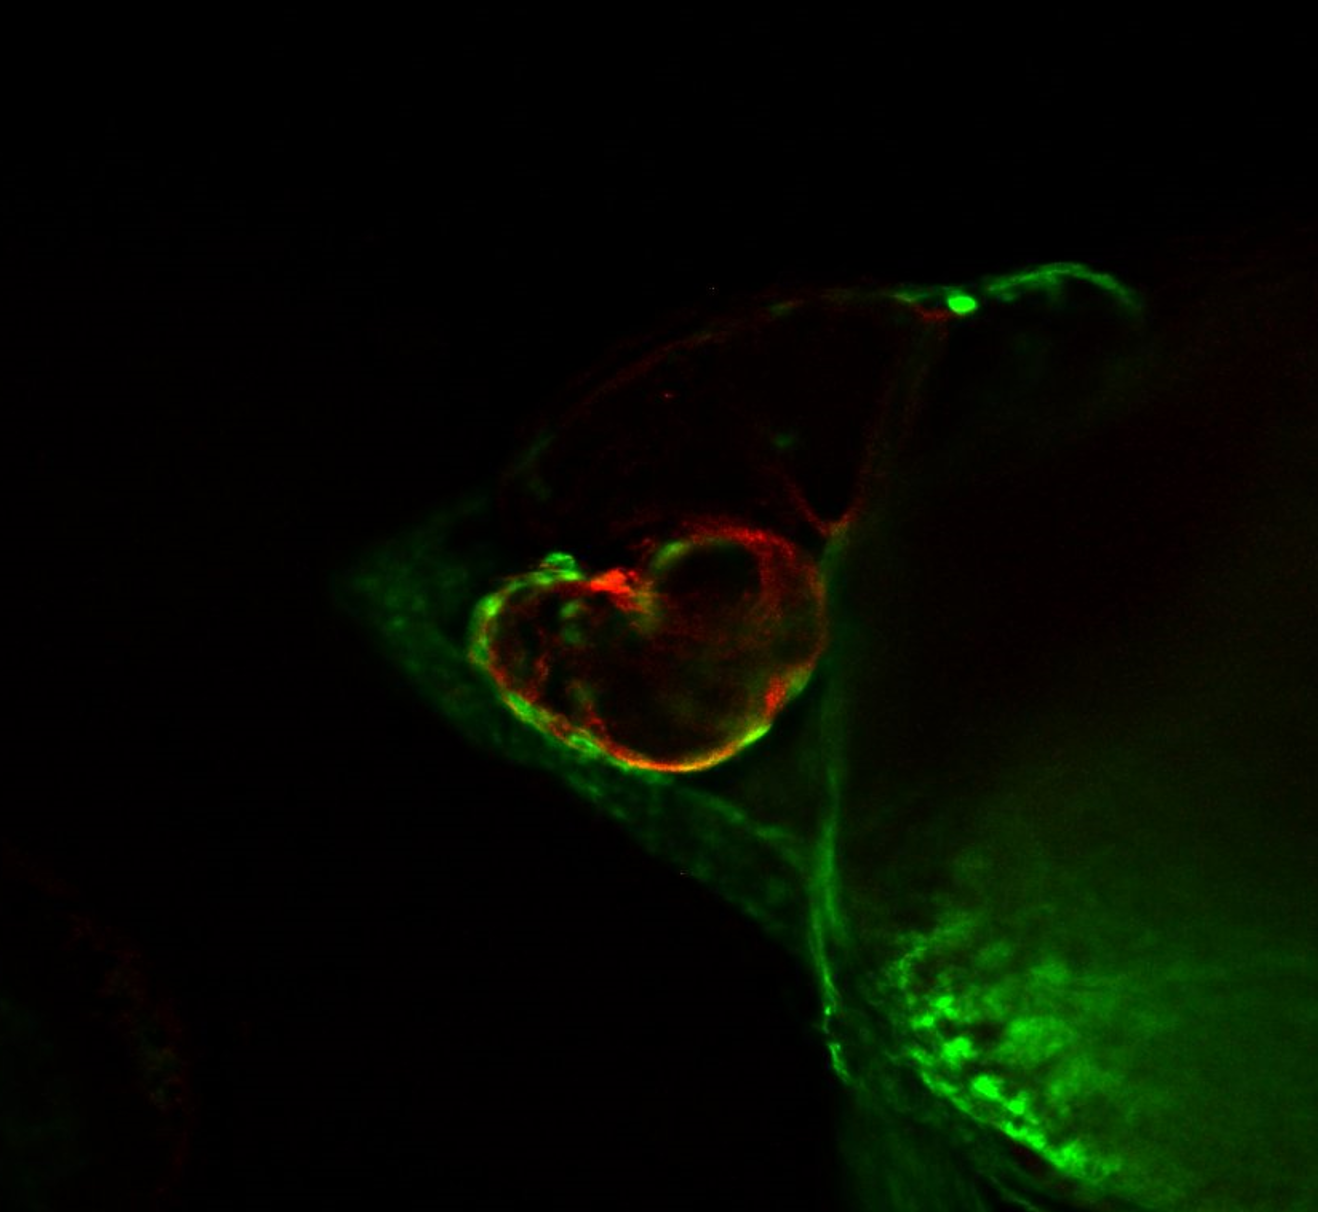 Fluorescent epithelial cells in zebrafish heart